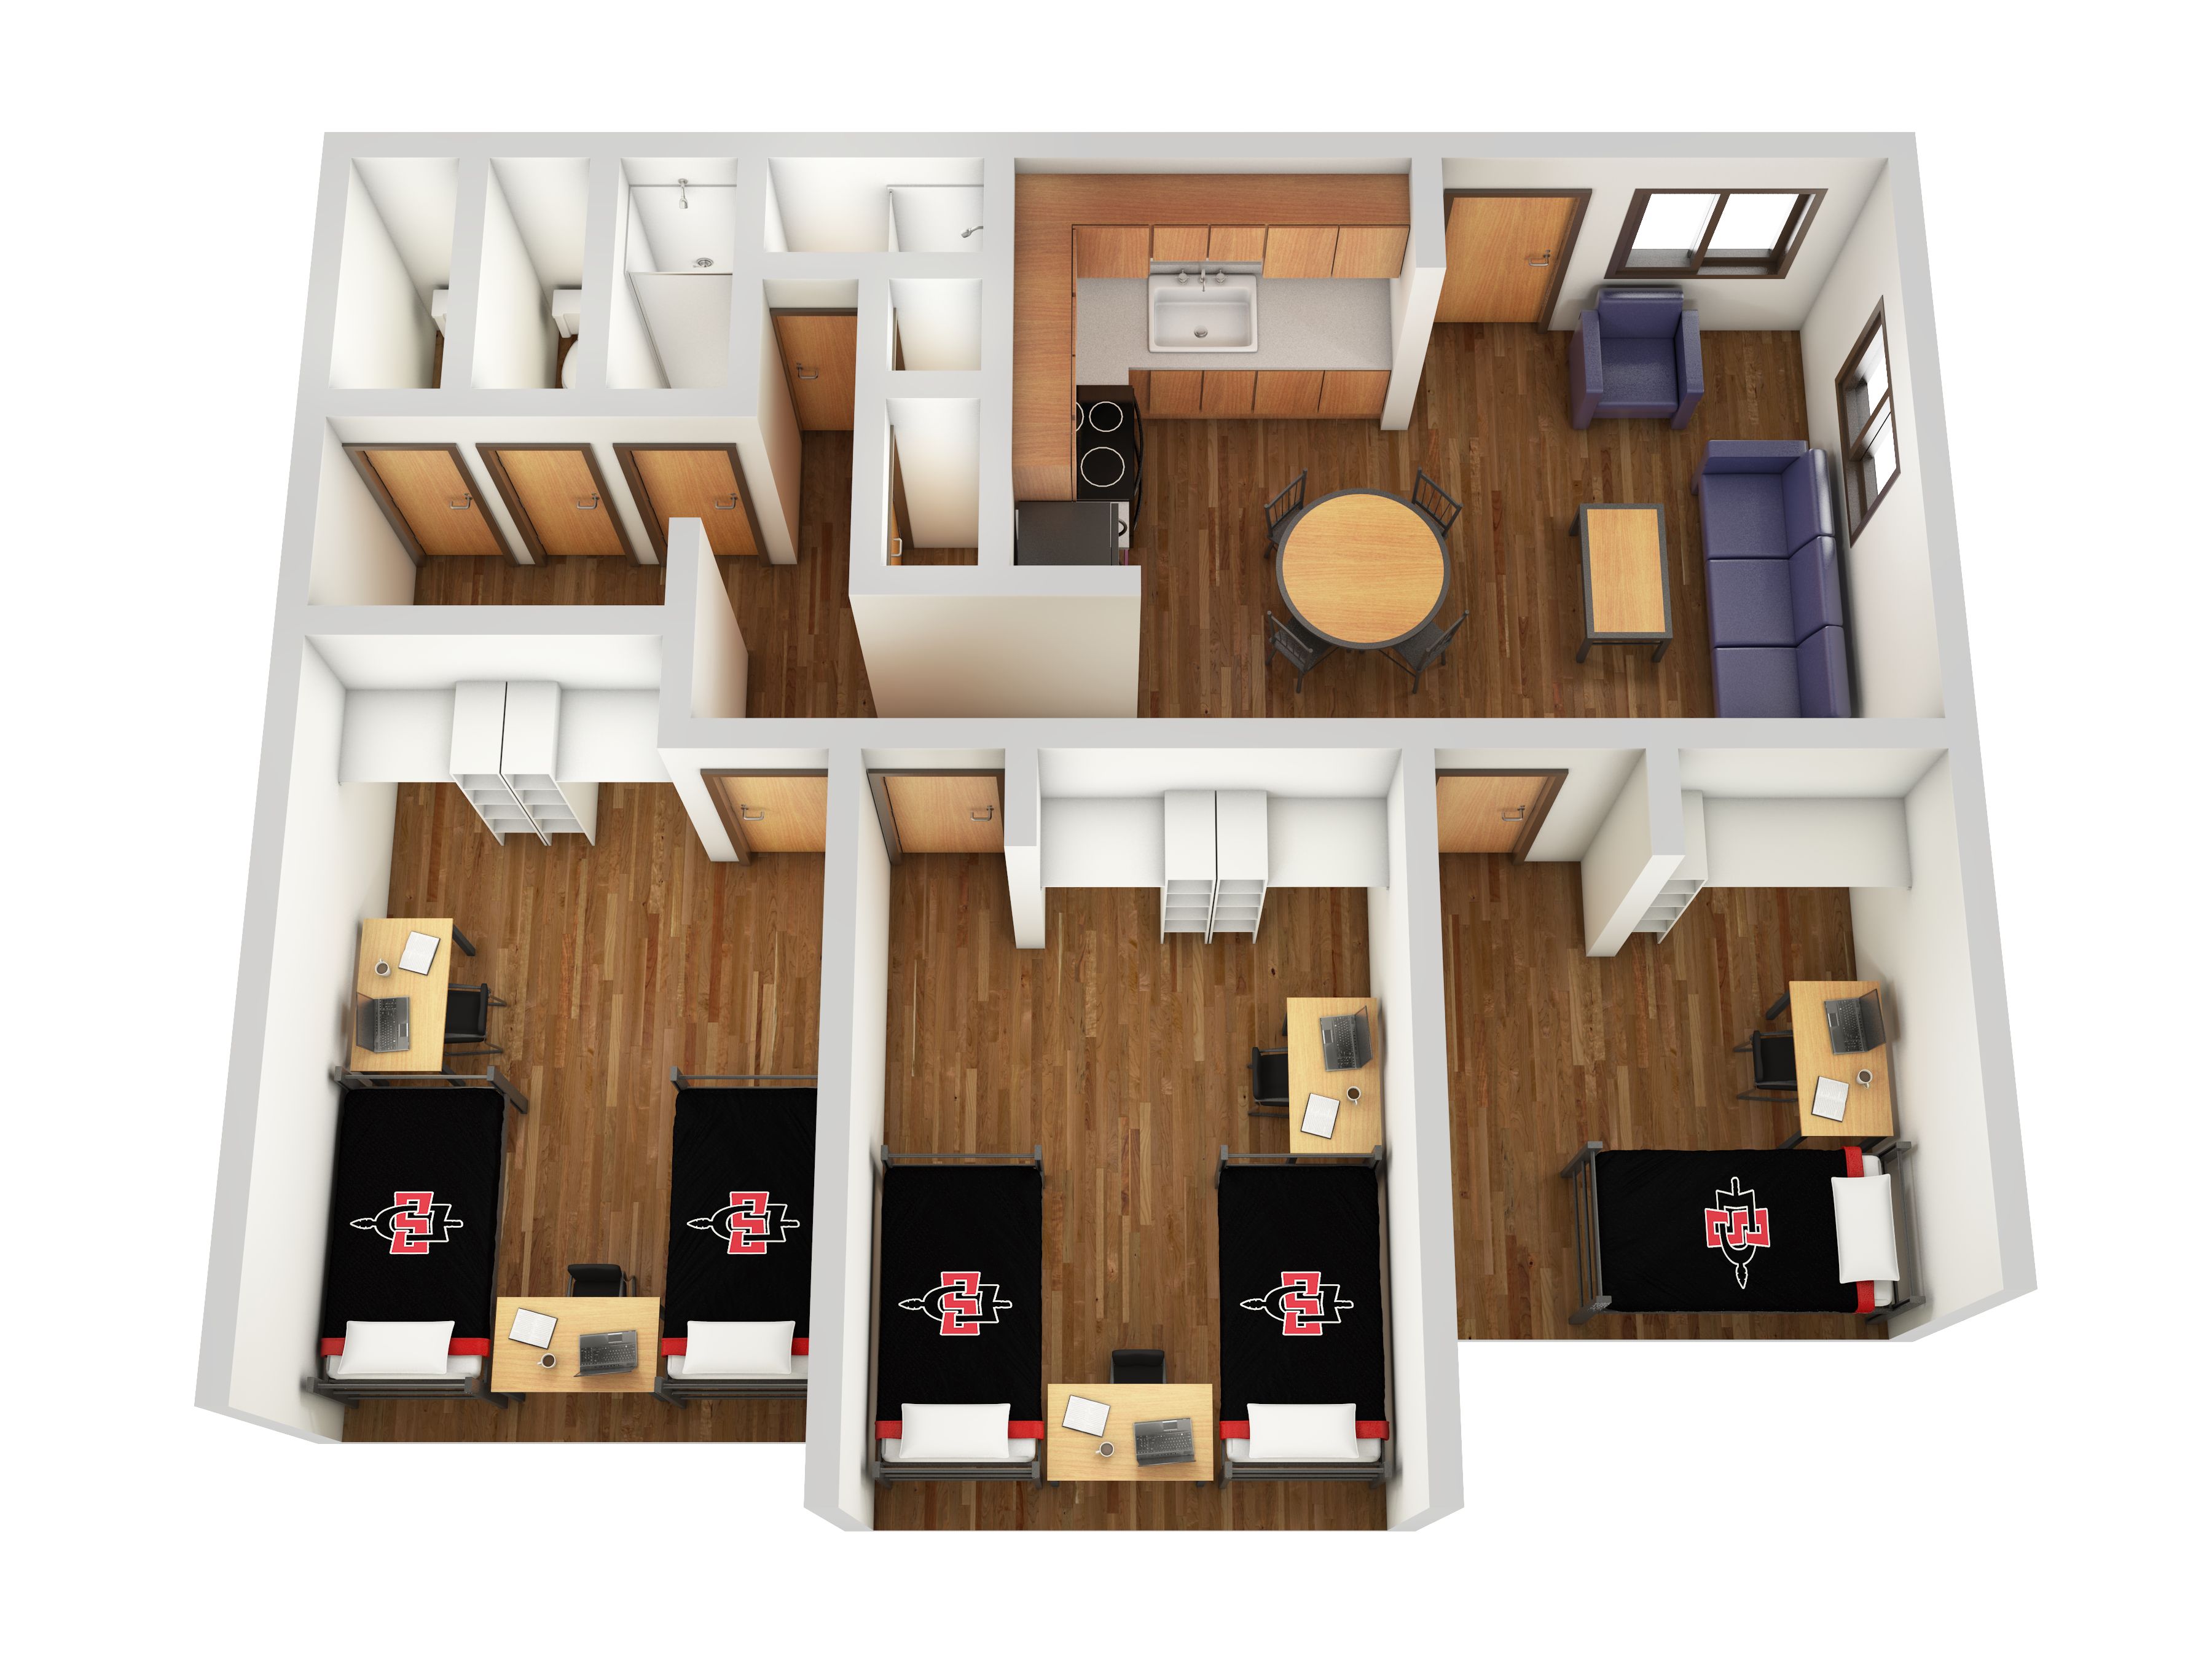 3 Bedroom Isometric Villa Alvarado